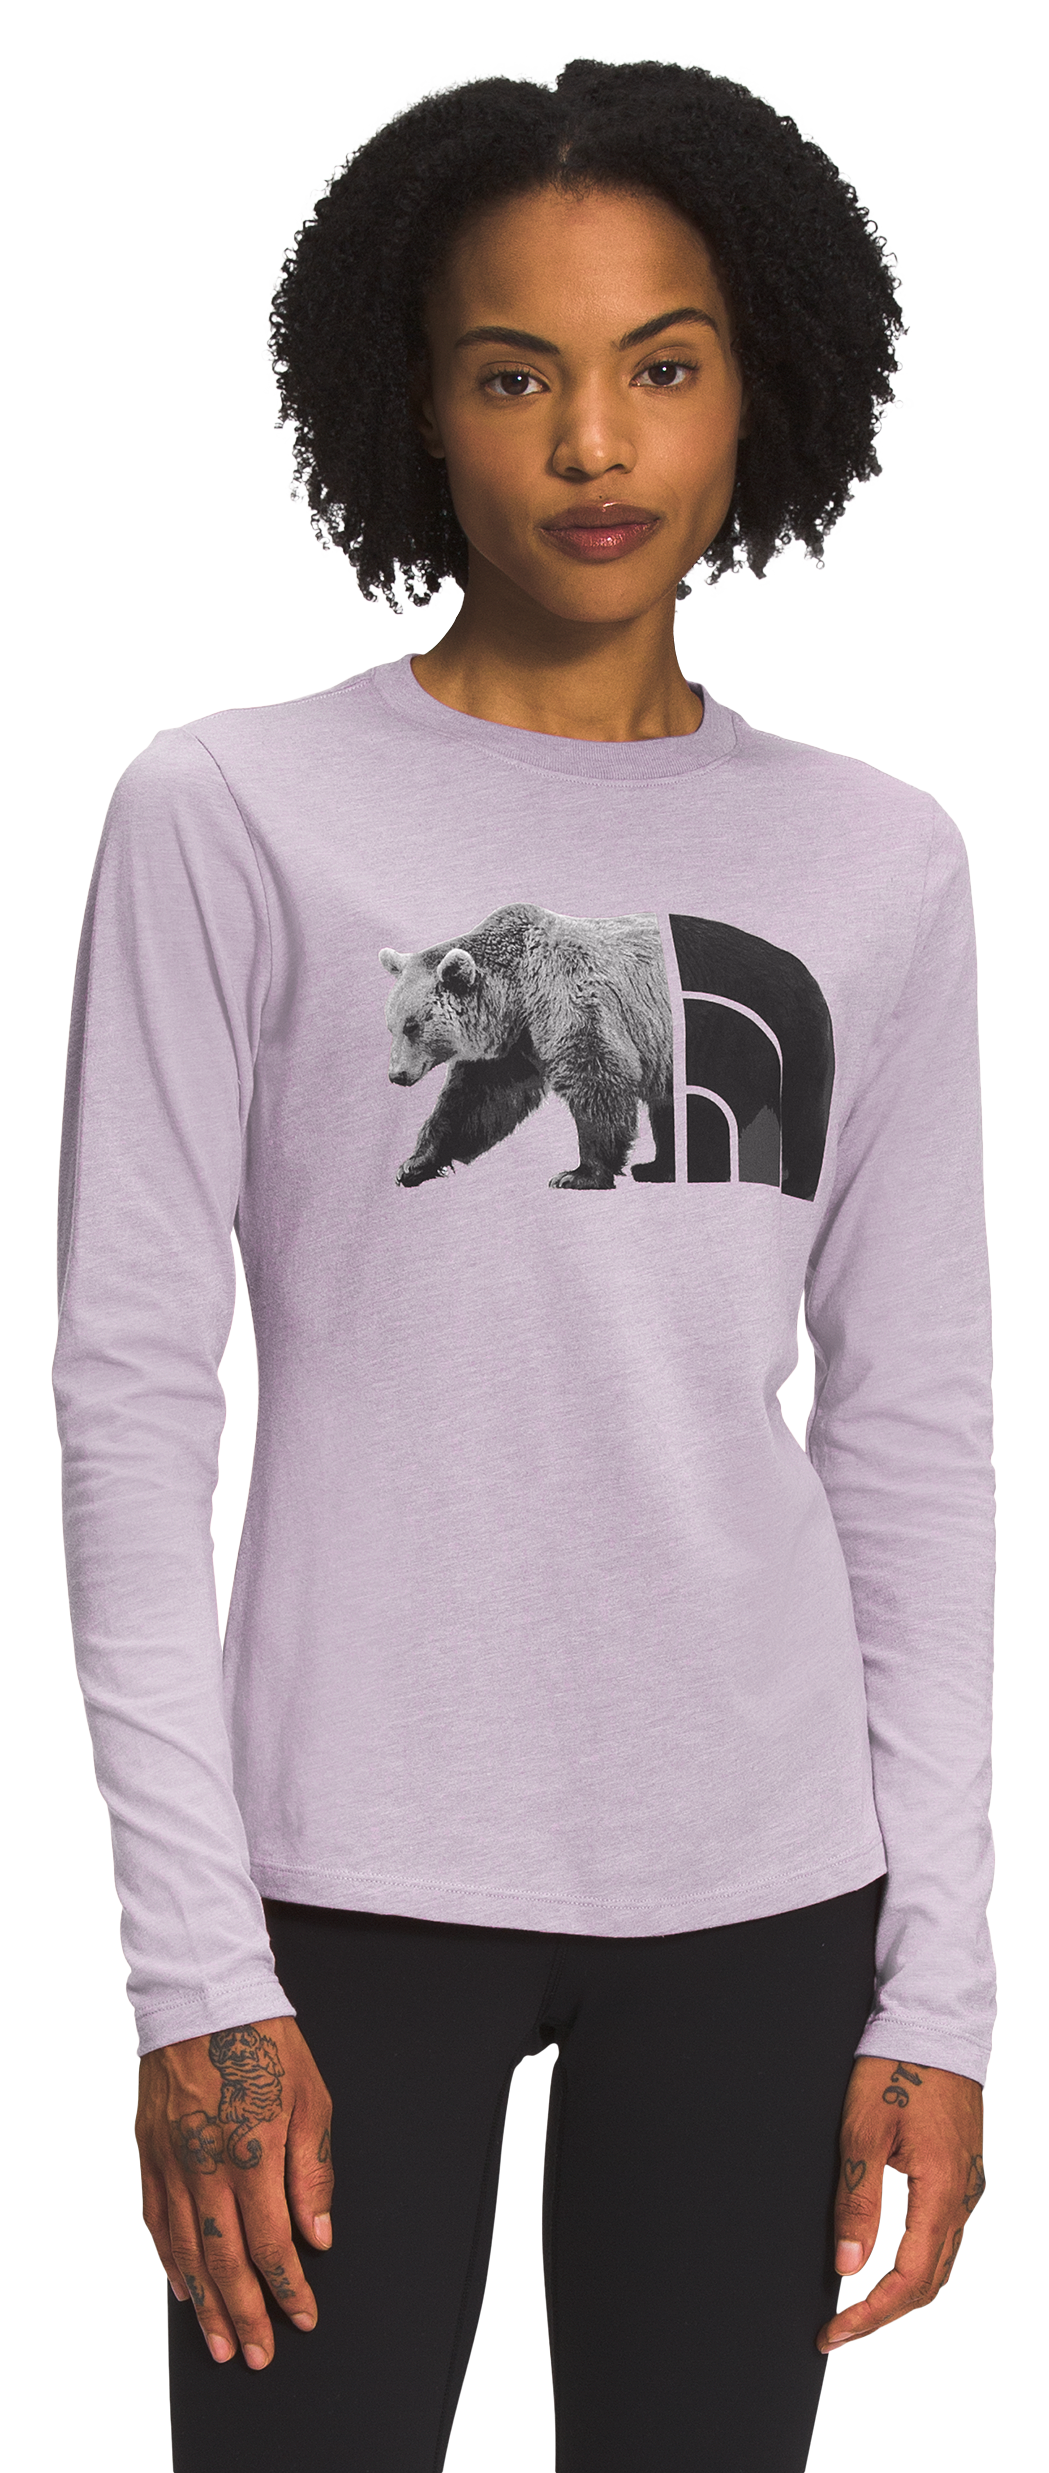 The North Face Tri-Blend Bear Long-Sleeve T-Shirt for Ladies - Lavender Fog Heather/TNF Black - XL